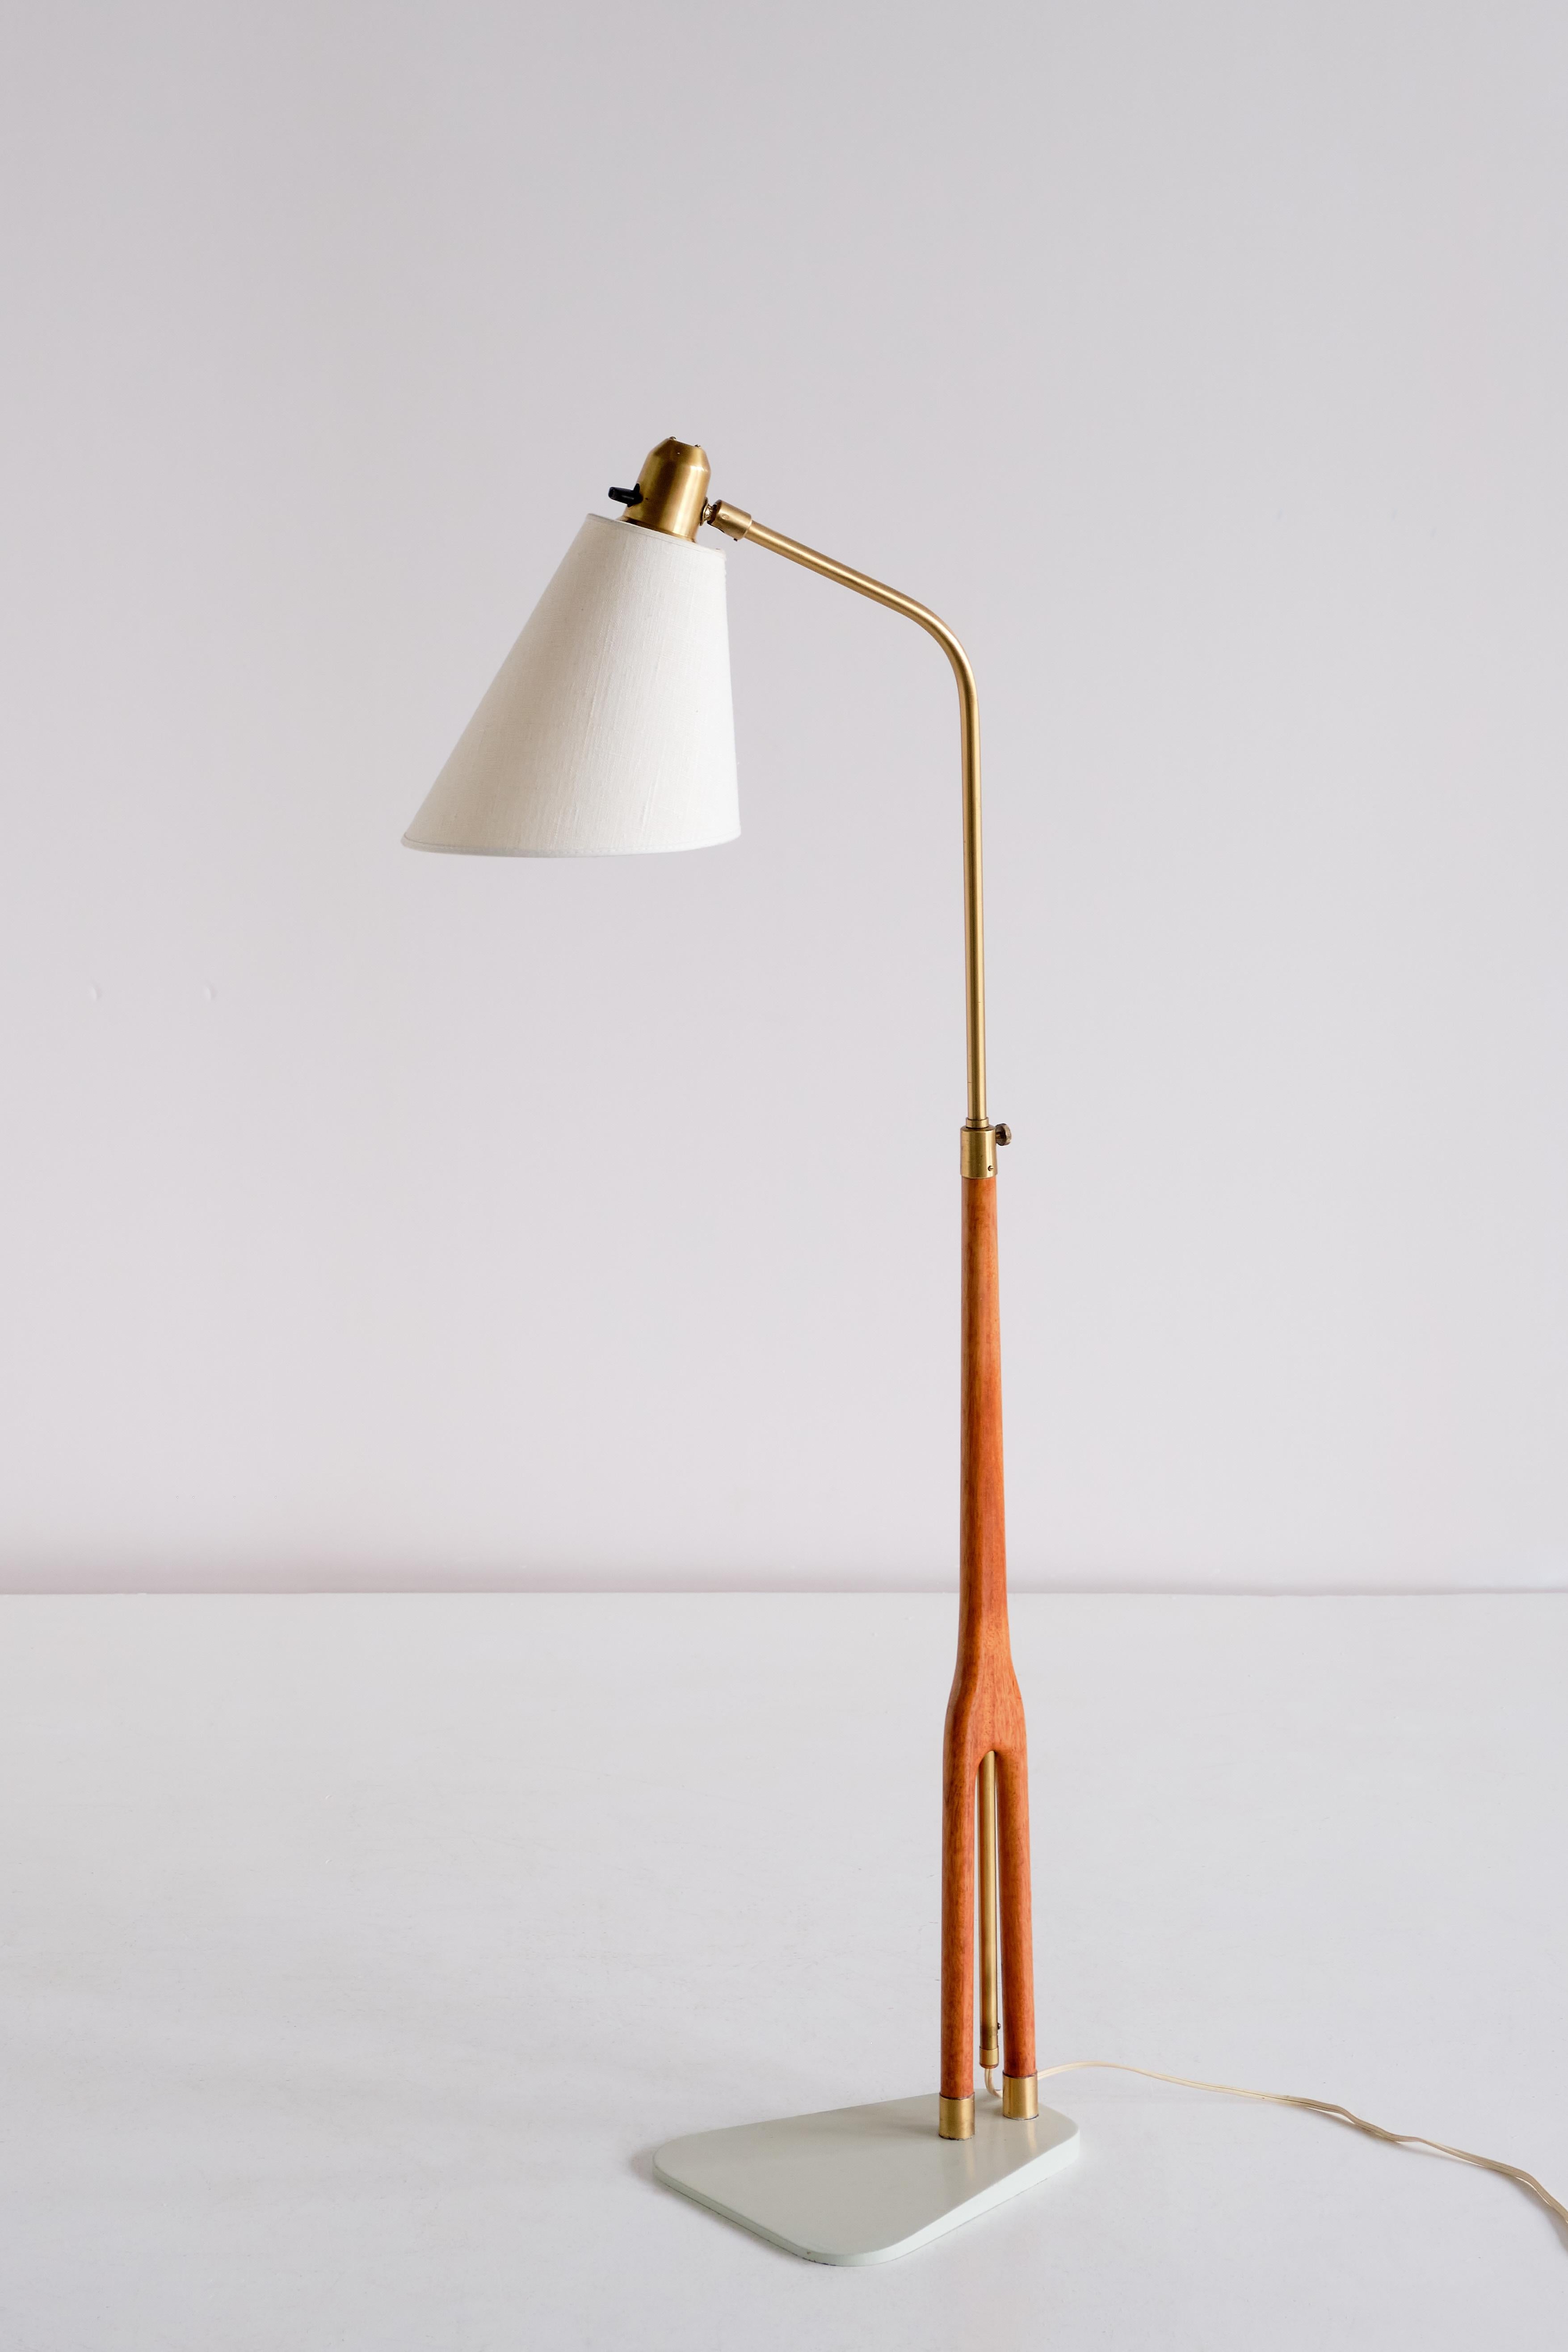 Scandinavian Modern Hans Bergström Floor Lamp in Teak and Brass, ASEA, Sweden, 1950s For Sale